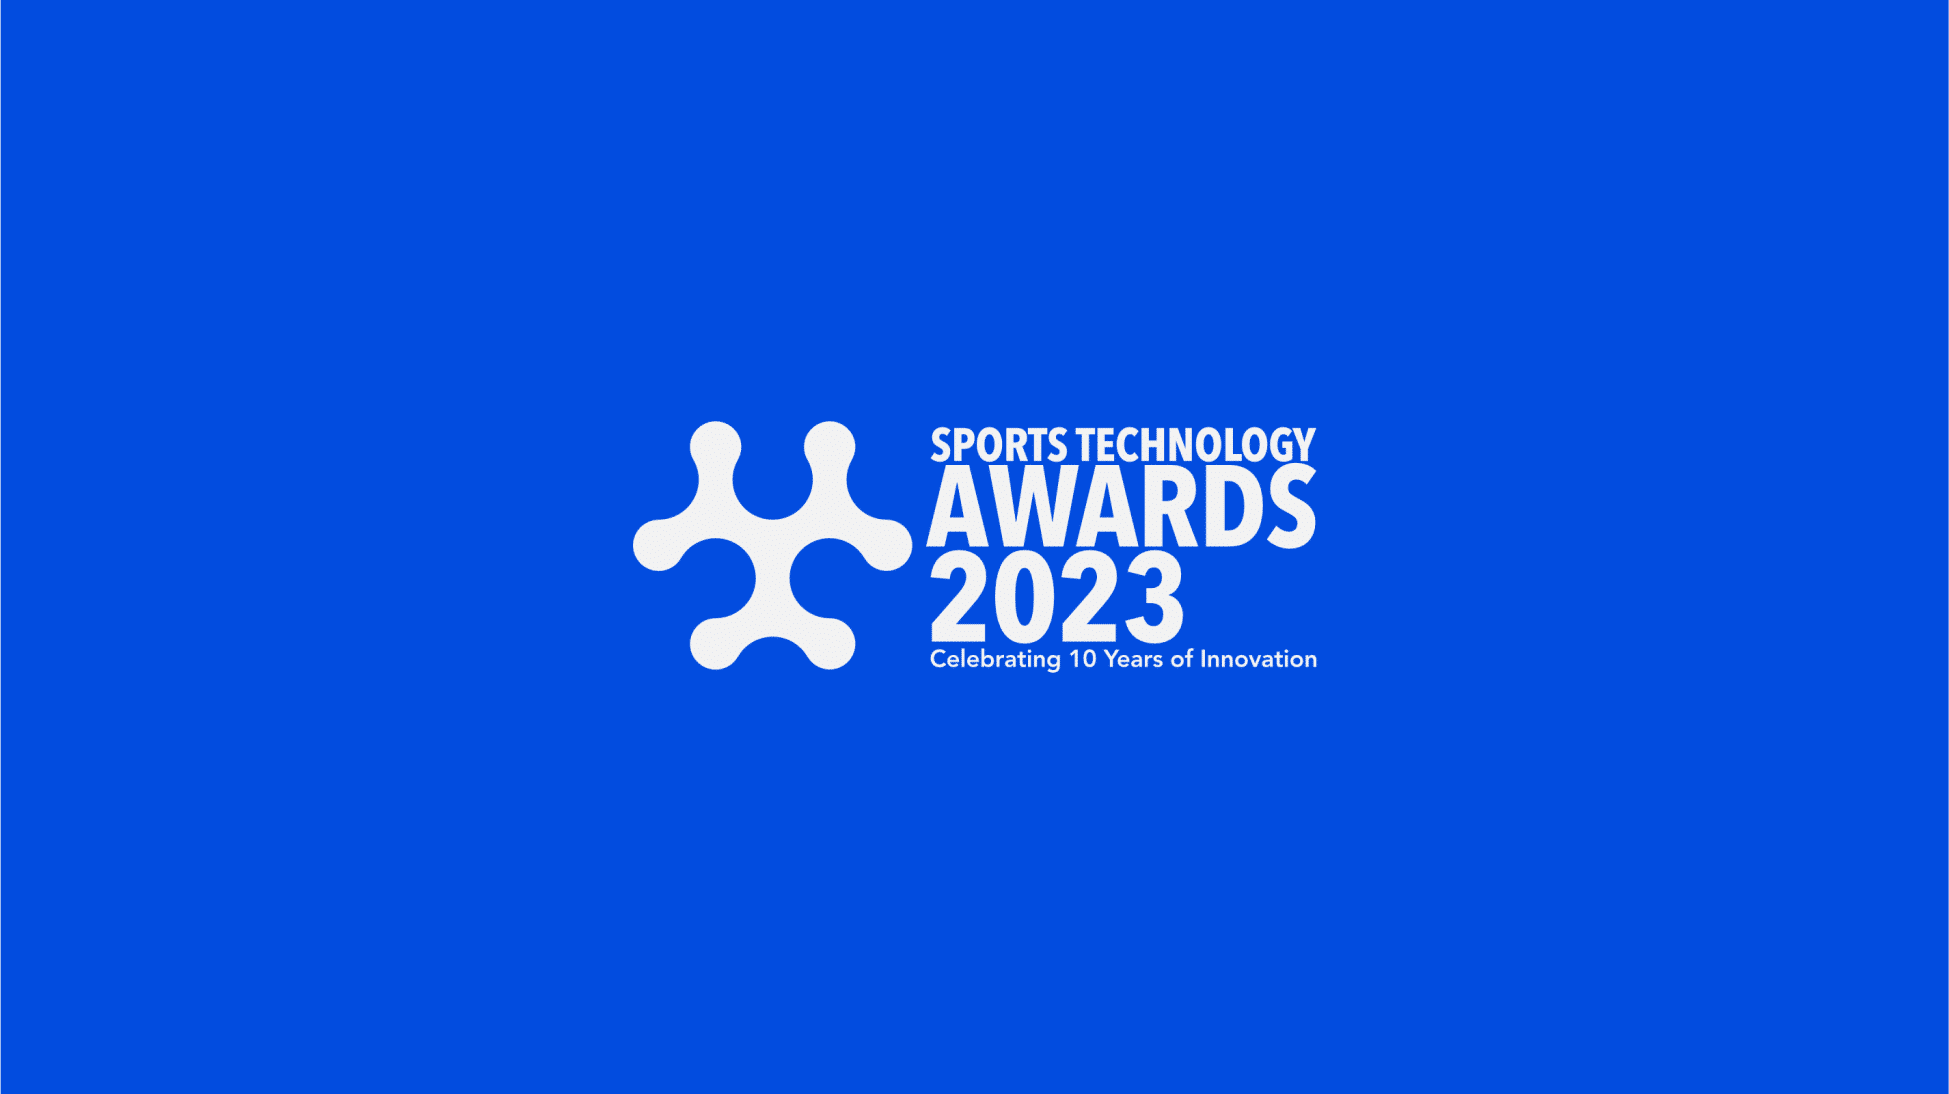 2023 sports technology awards logo